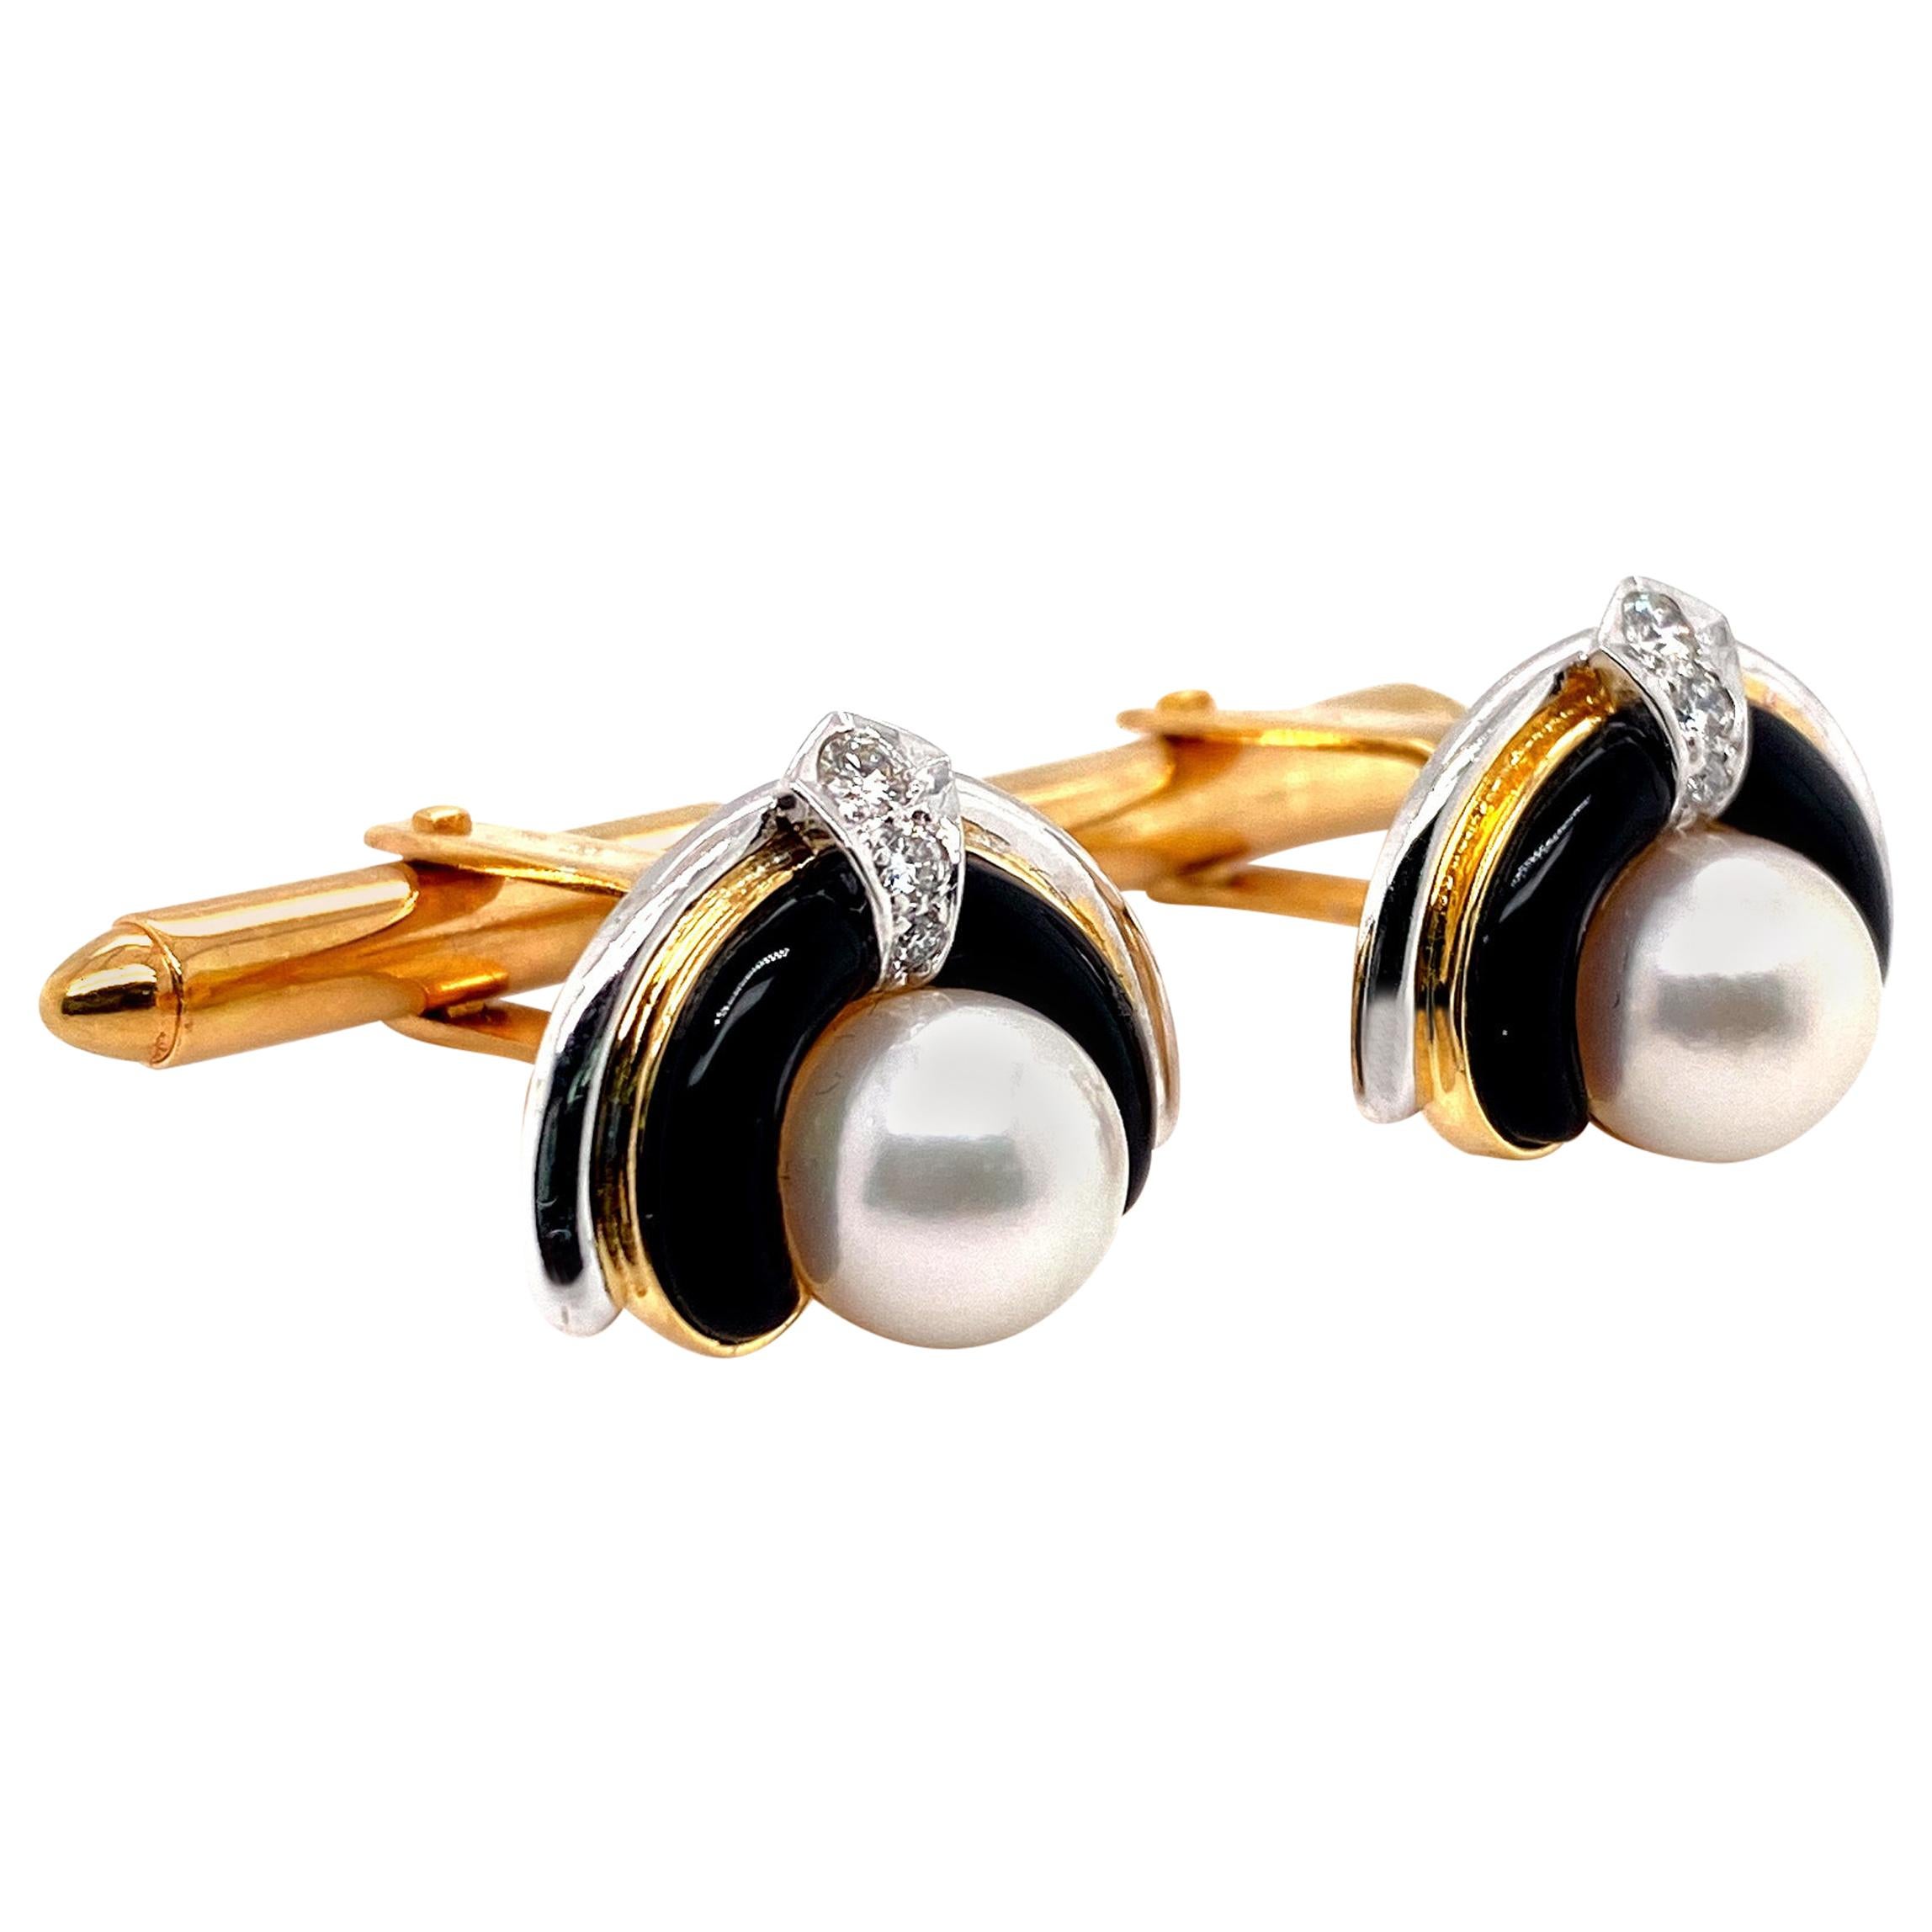 Freshwater Pearl and Diamonds Cufflinks in 18 Karat Gold